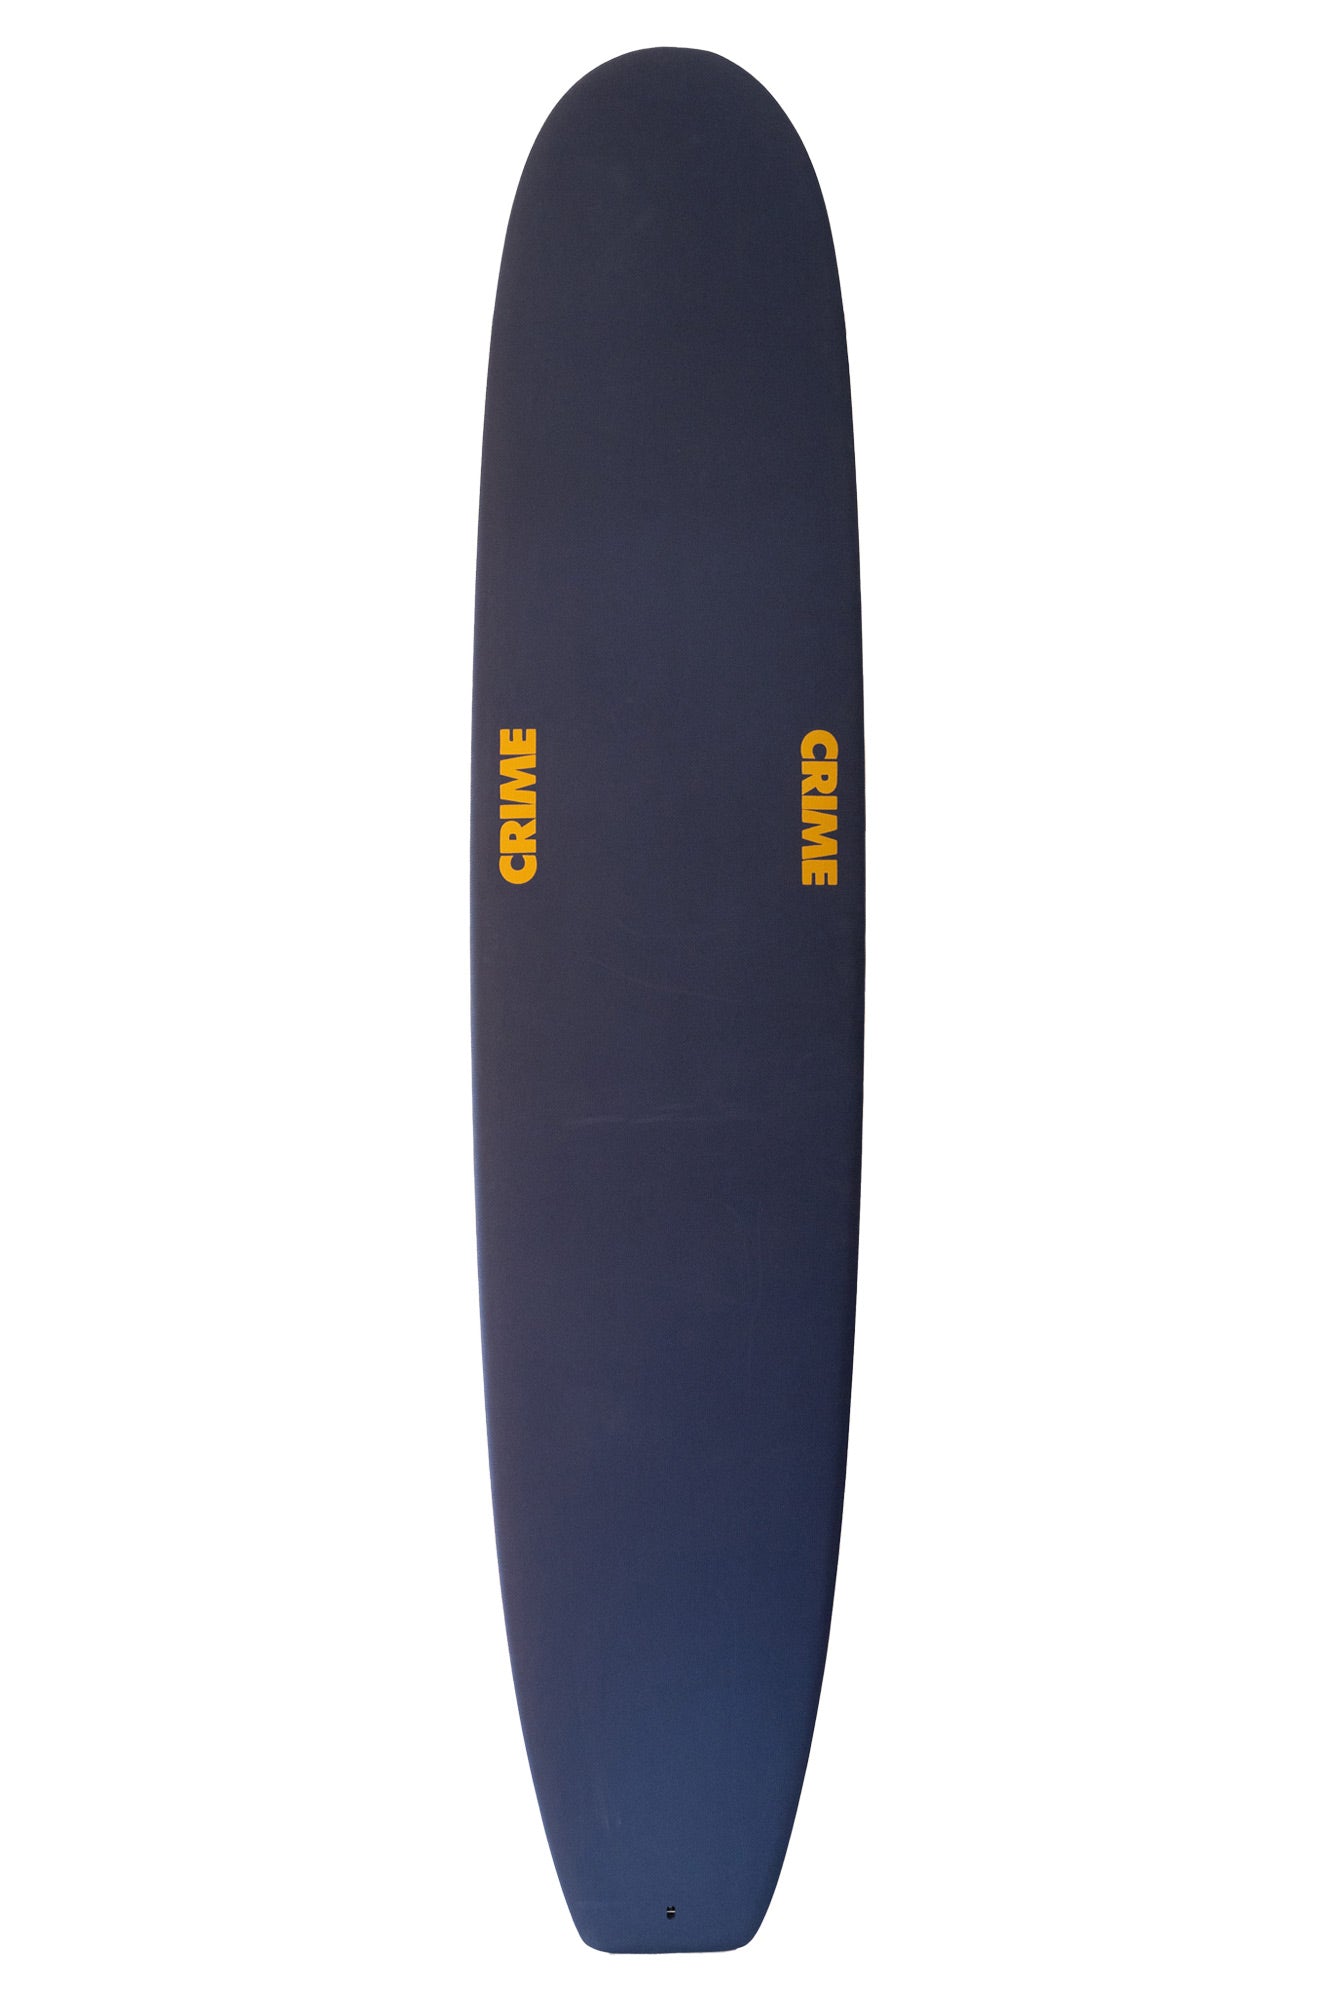 9'5 SURF CRIME NOSE RIDER - NAVY